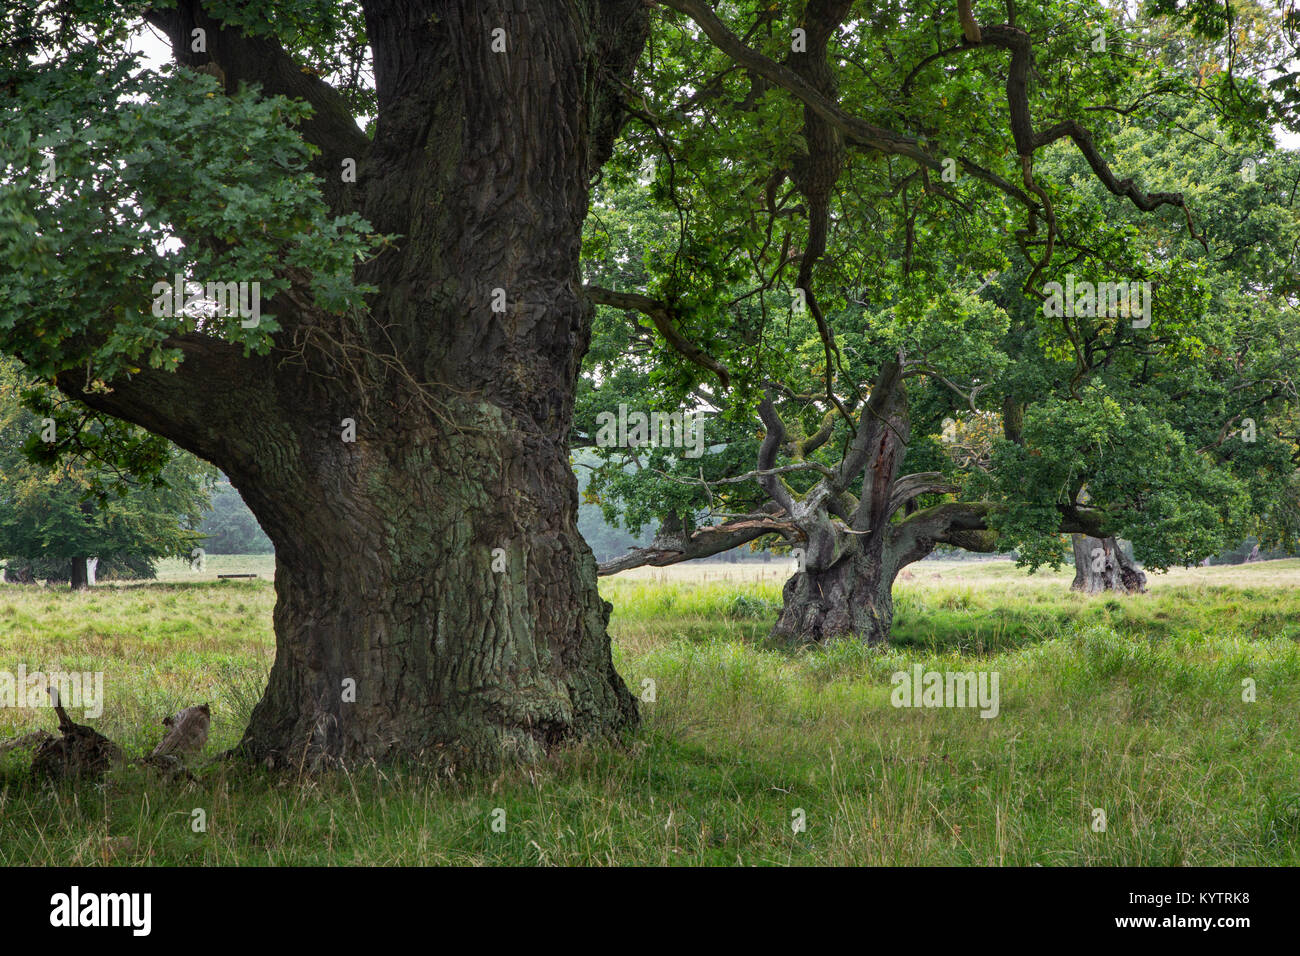 Ancient centuries old English oaks / pedunculate oak trees (Quercus robur) in Jaegersborg Dyrehave / Dyrehaven near Copenhagen, Denmark Stock Photo